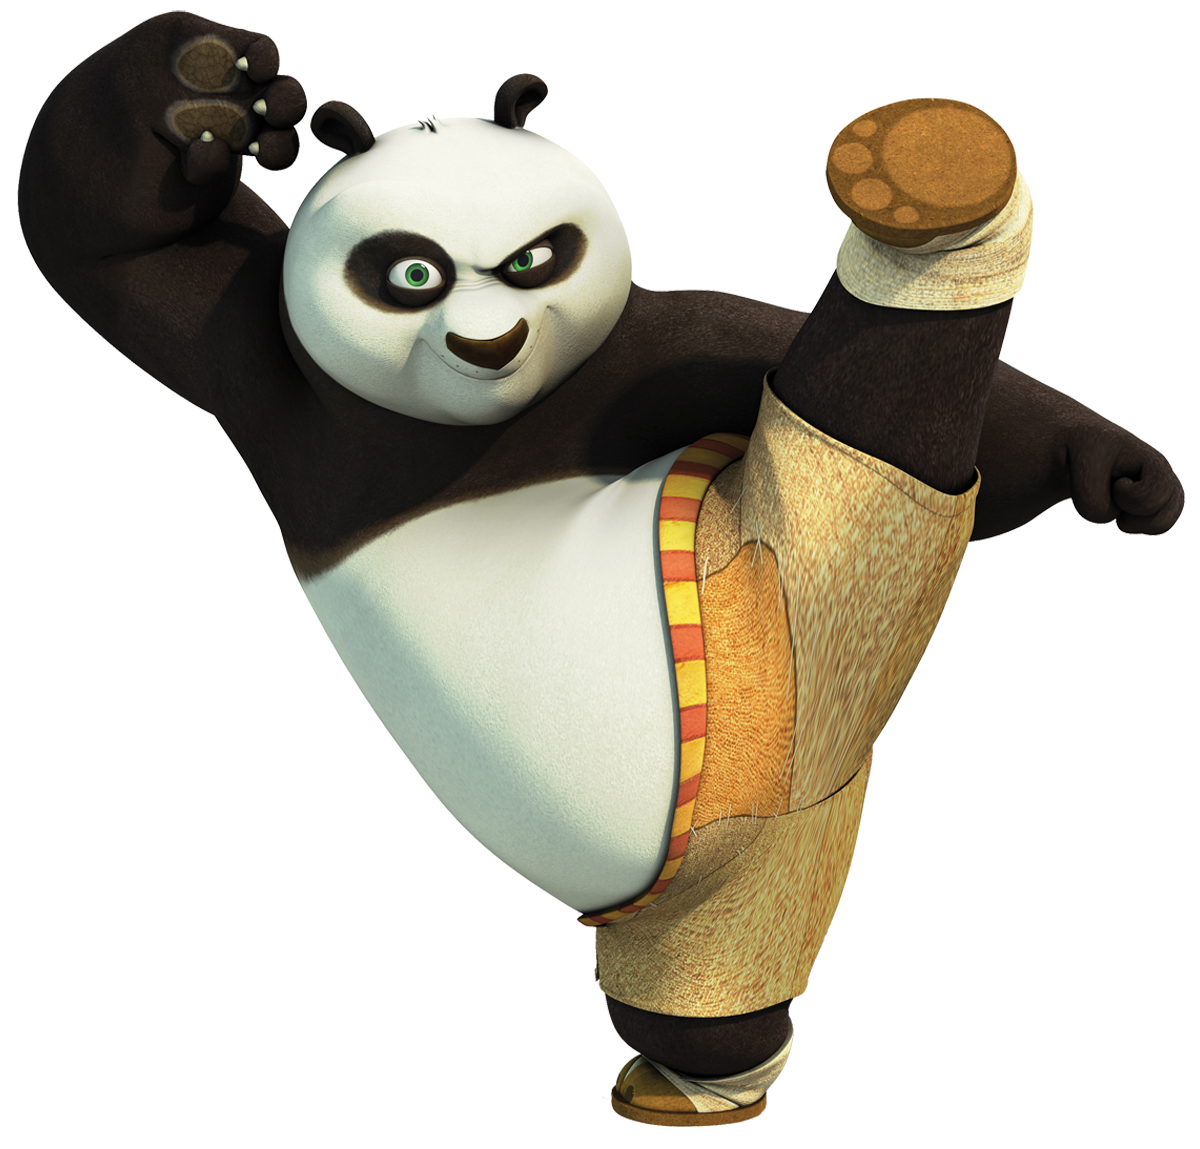 Кунг фу панда описание